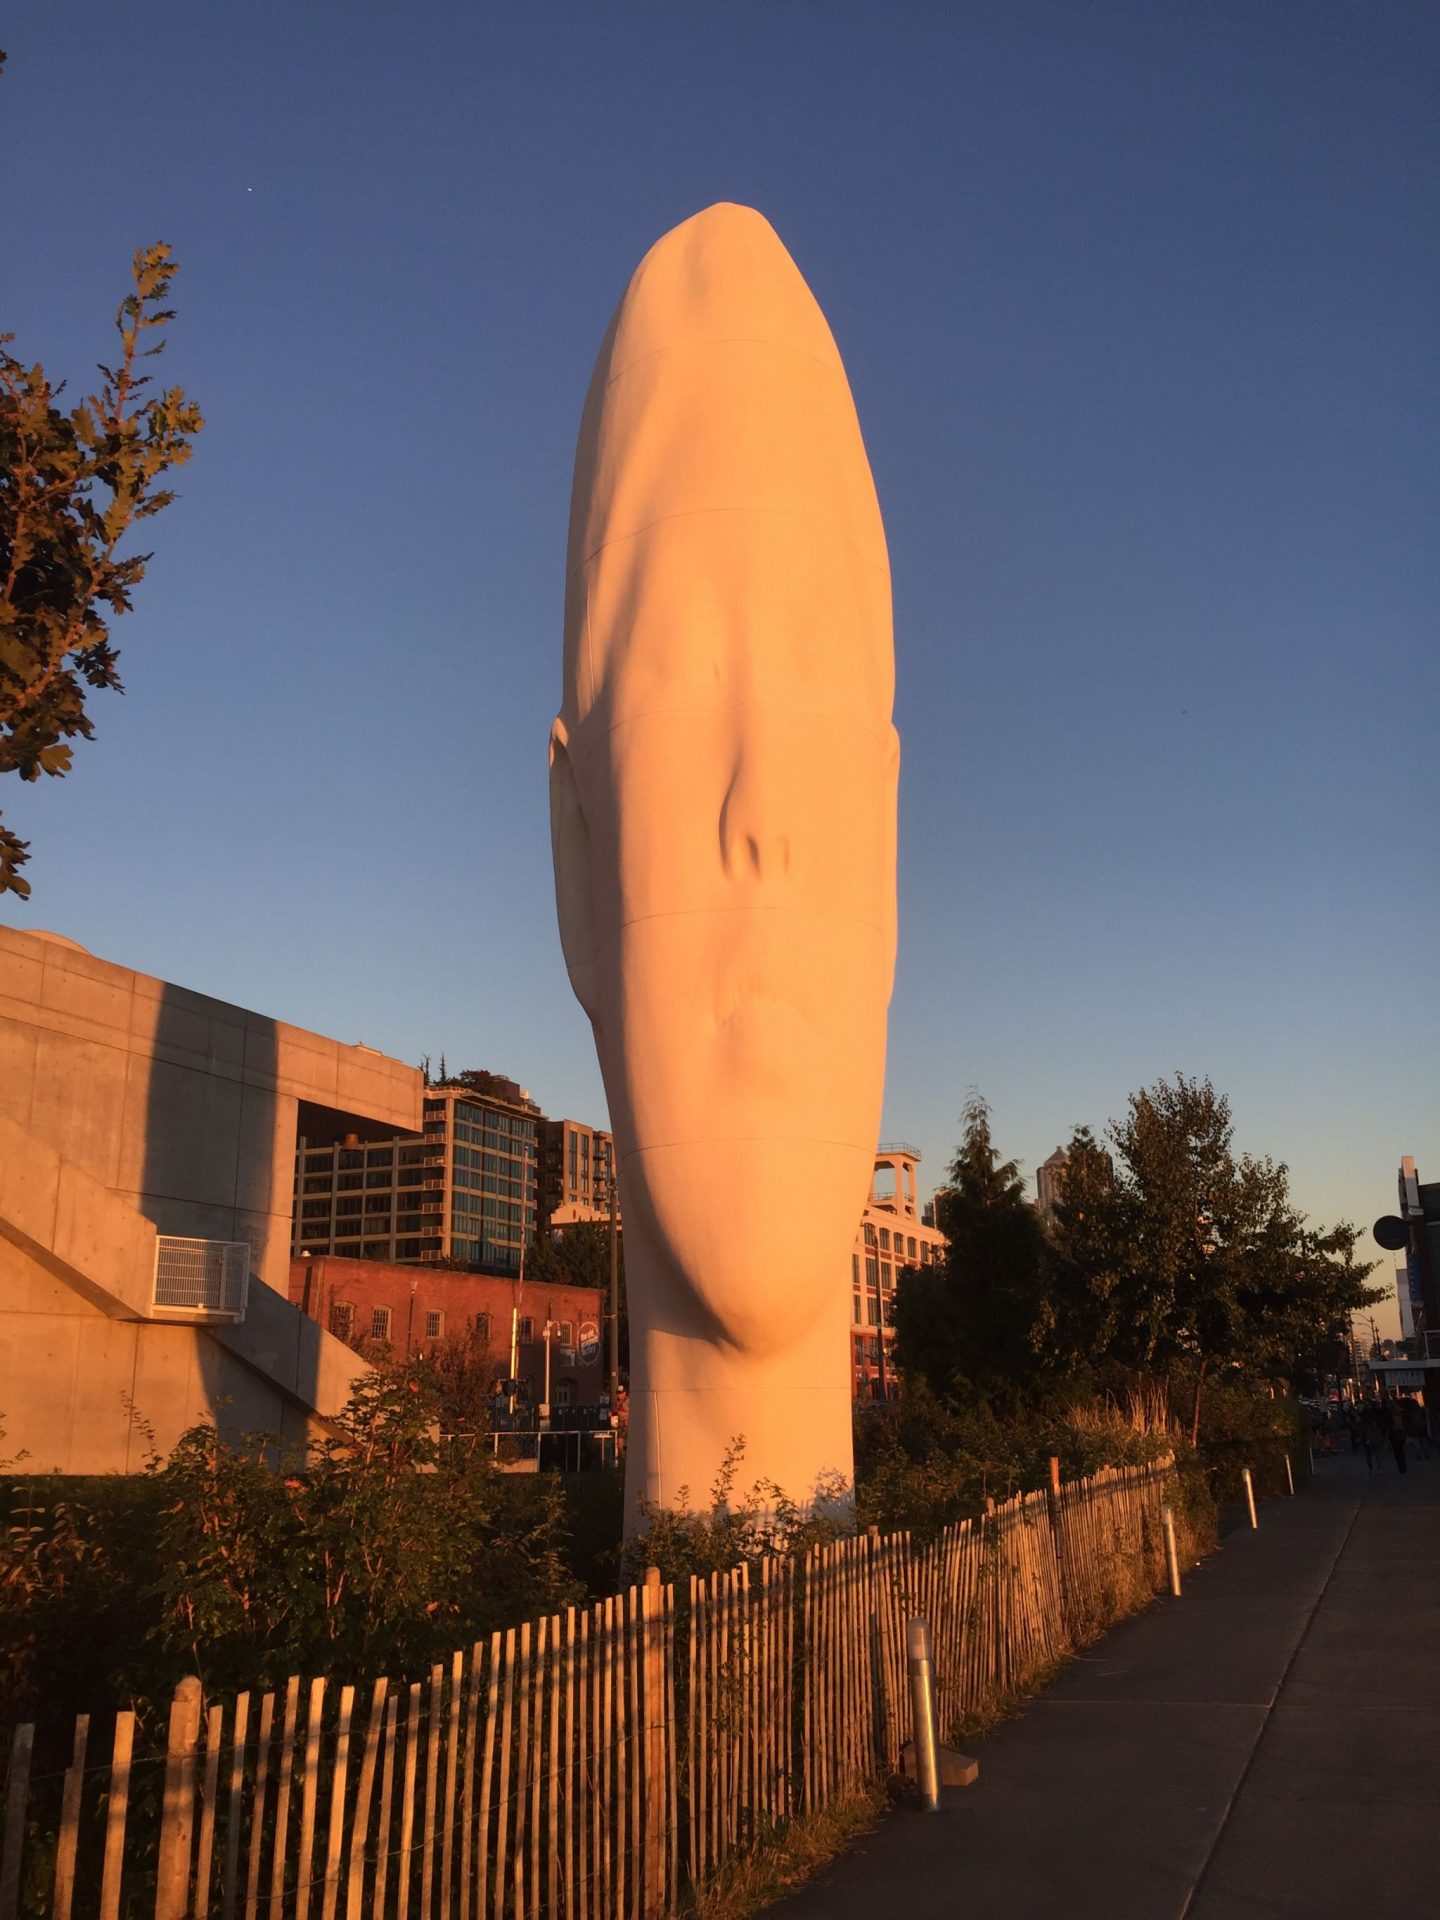 Echo head sculpture in Olympic Sculpture Park